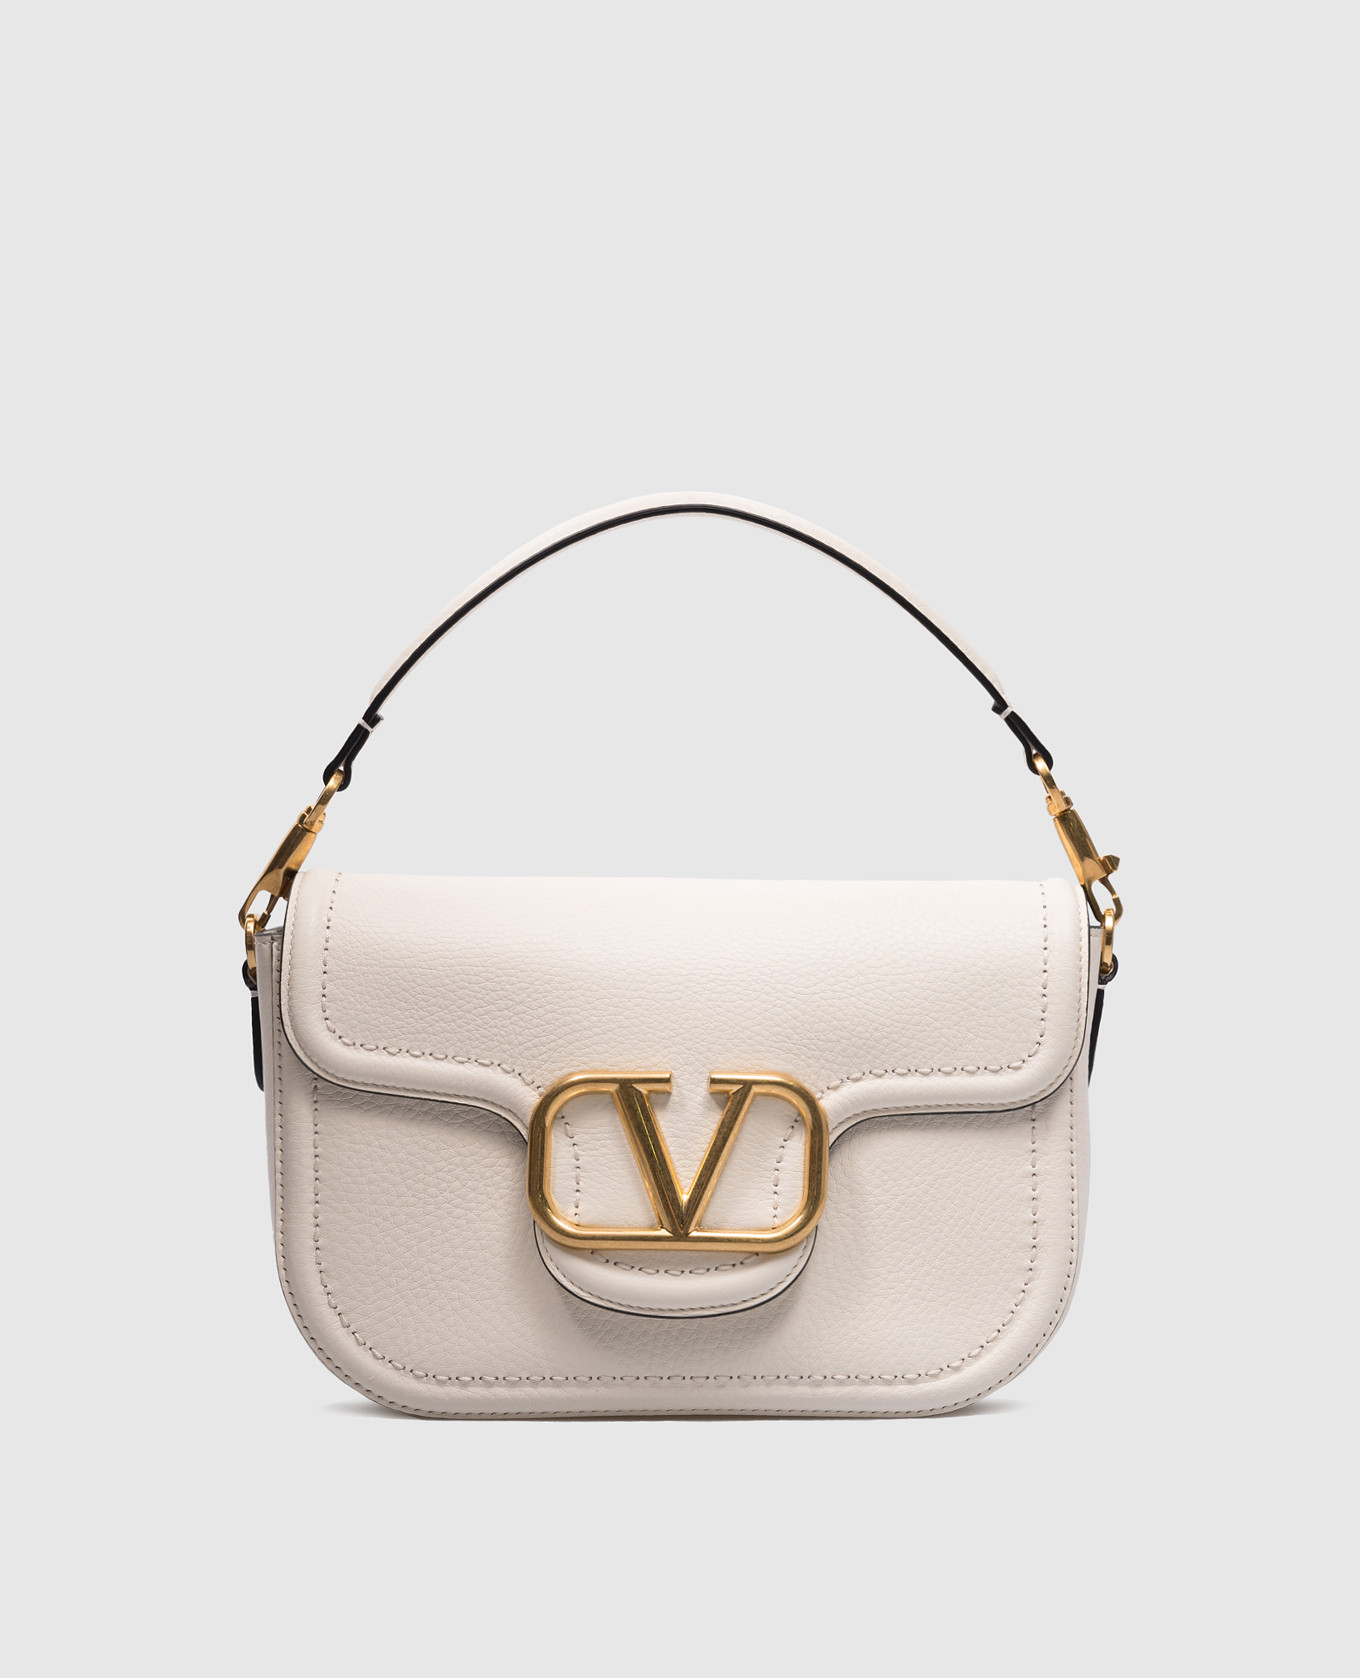 Alltime white leather messenger bag with metallic VLogo Signature logo